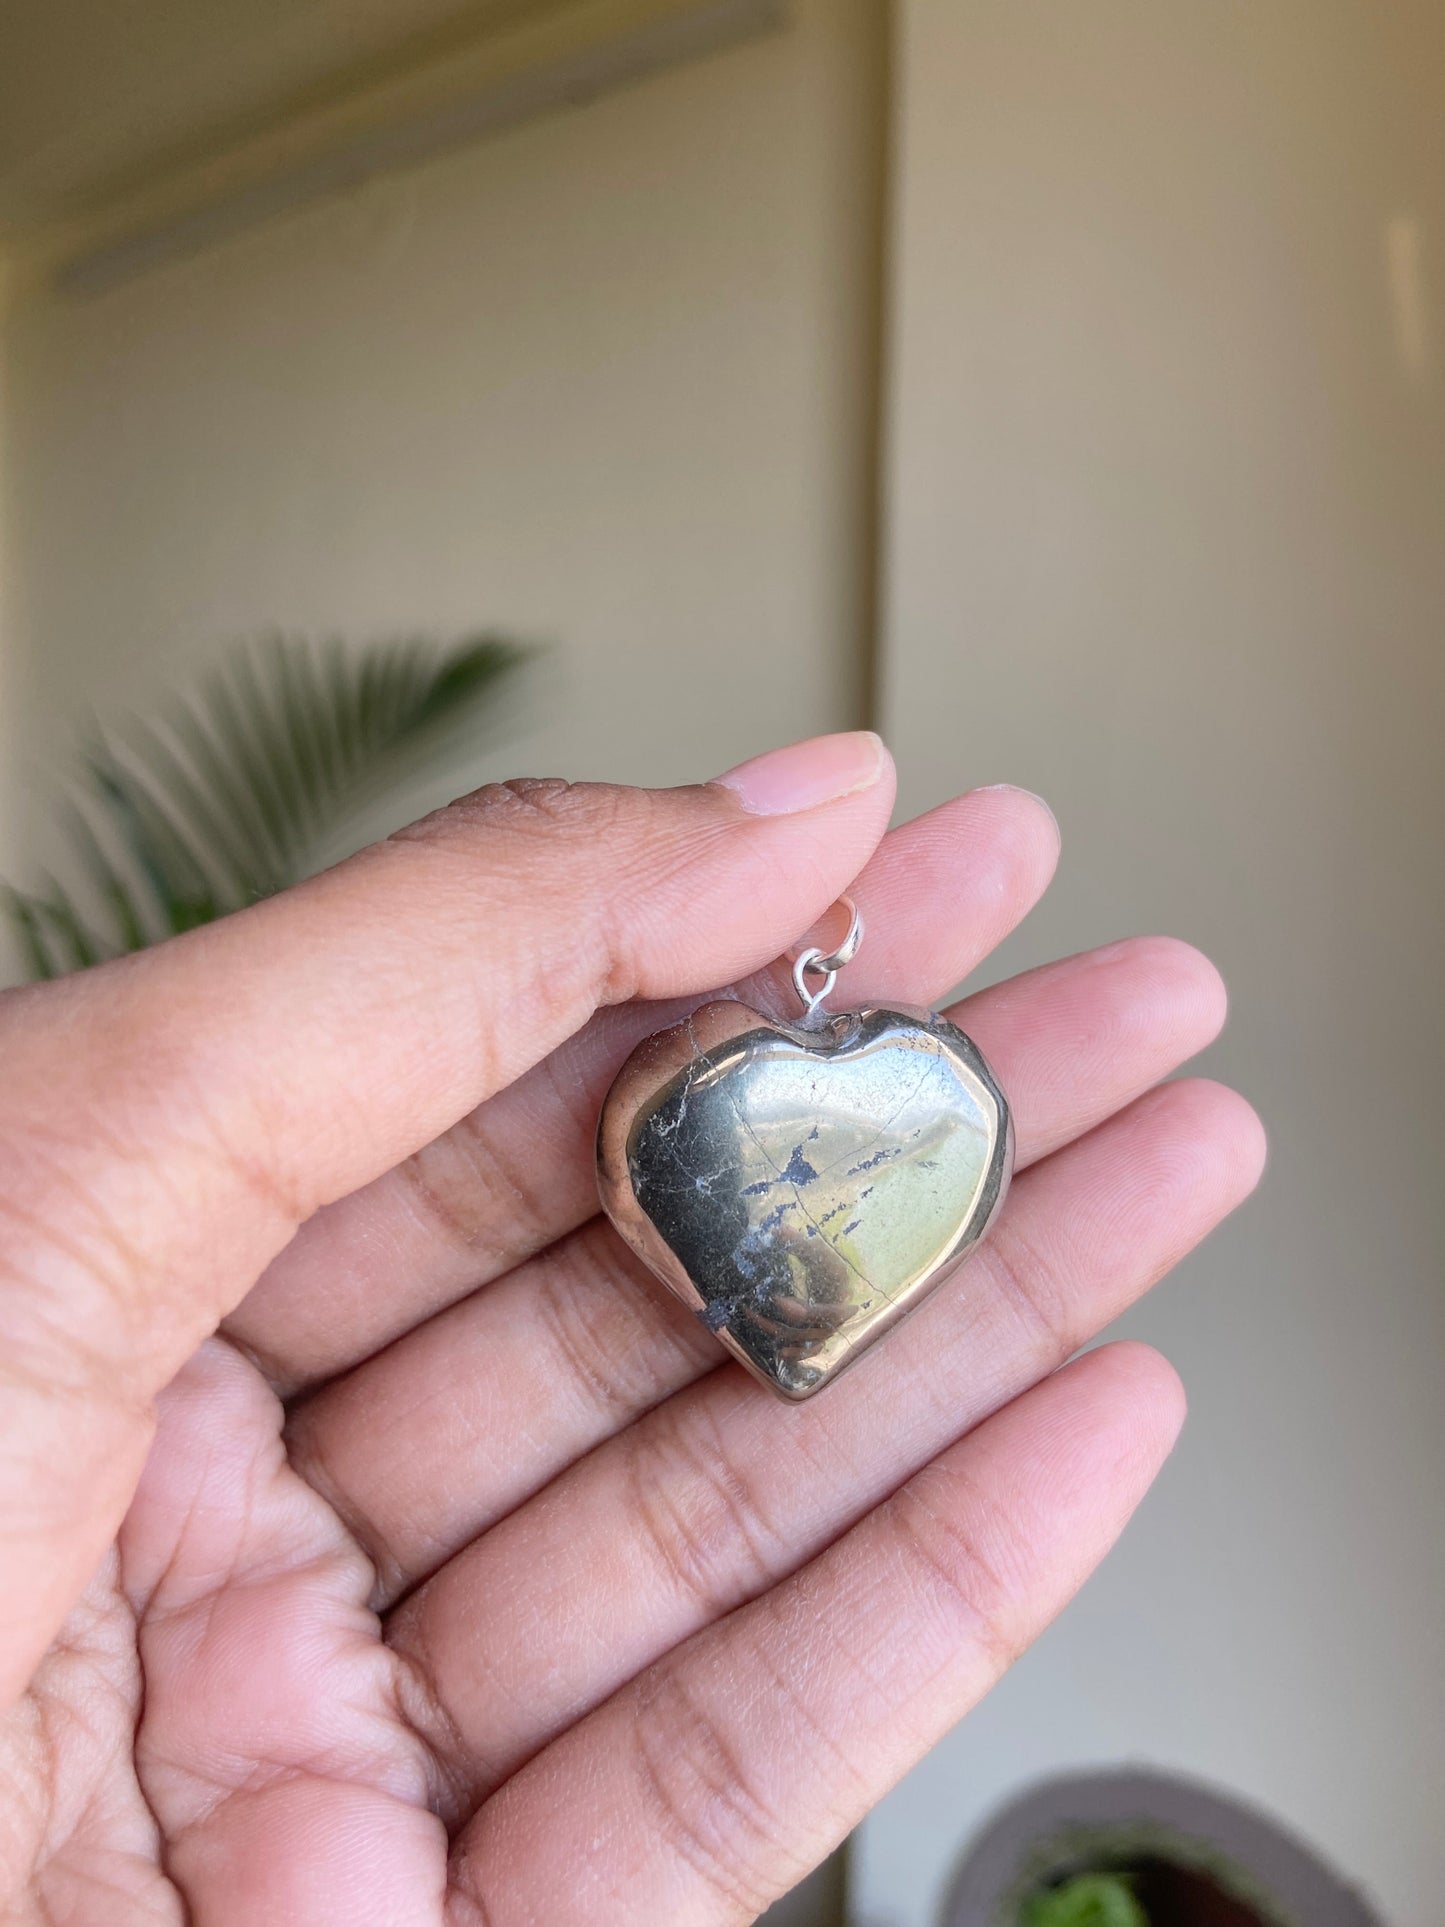 Pyrite Mini Heart Pendants With Black Cord | Financial Abundance & Protection Regular Crystal Stones